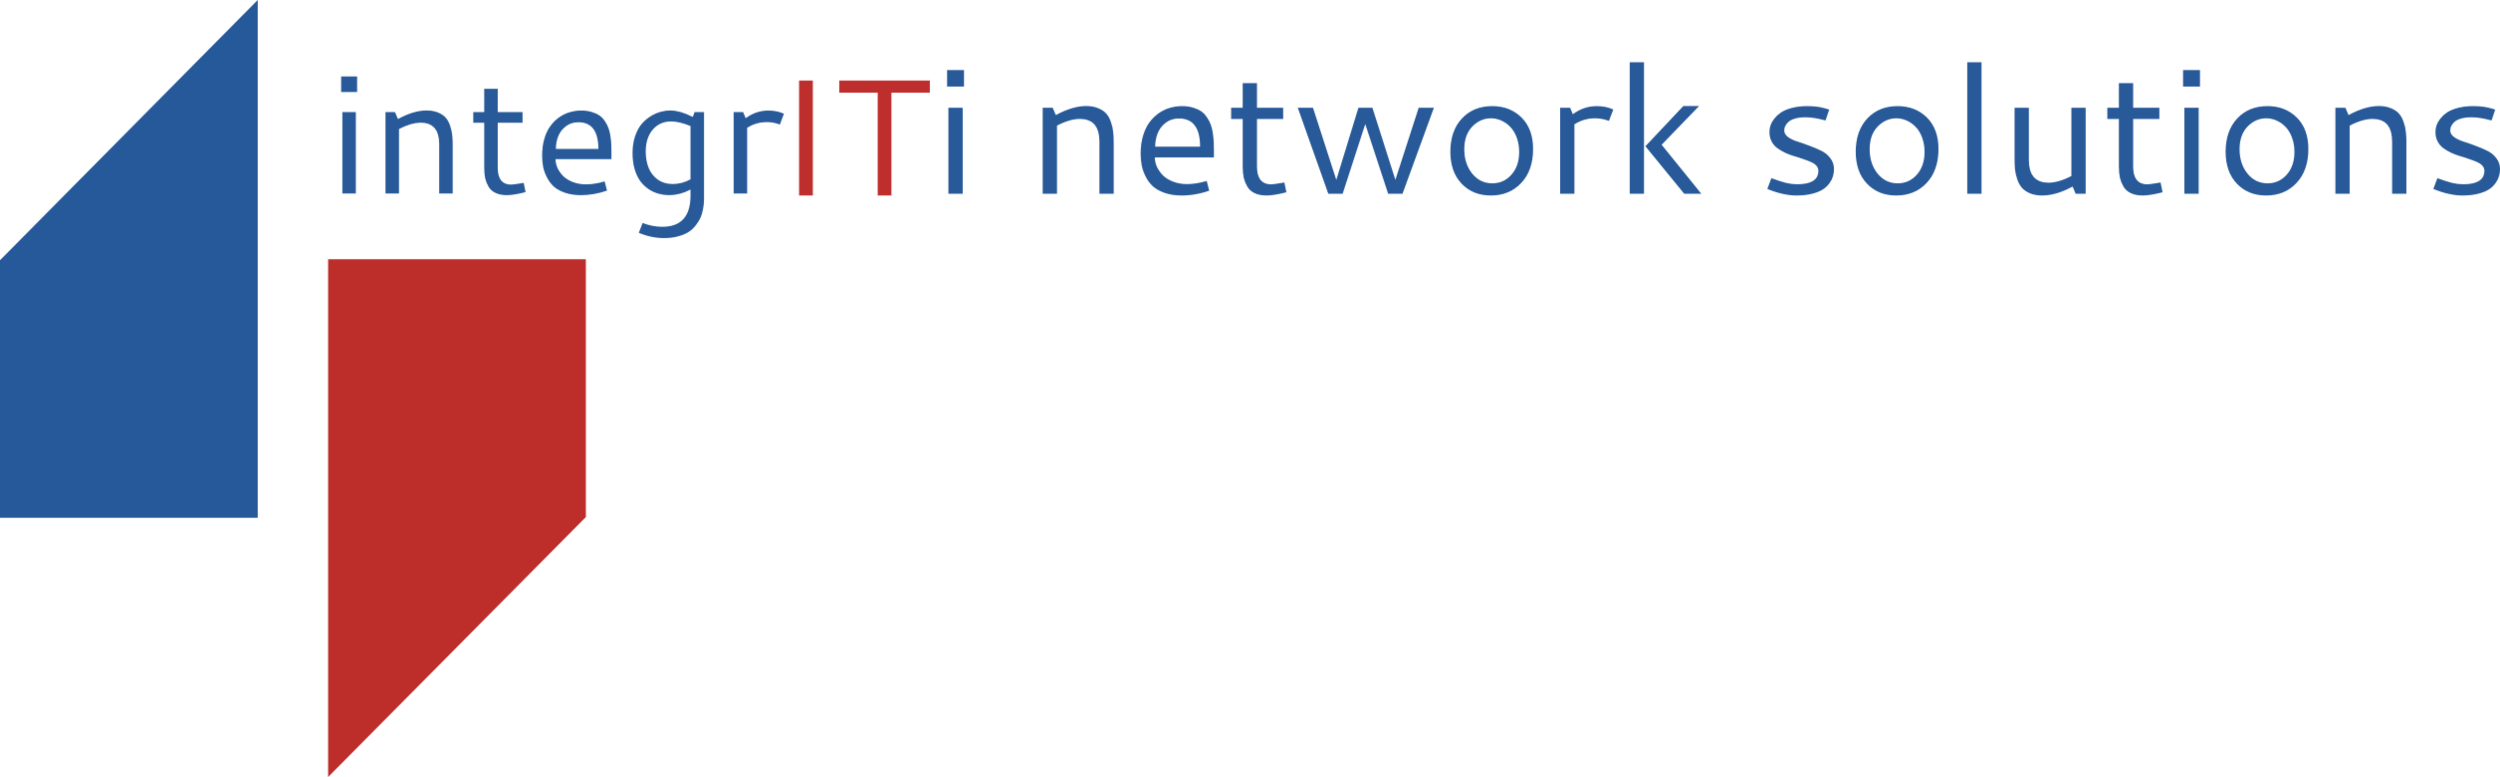 integrITi network solutions